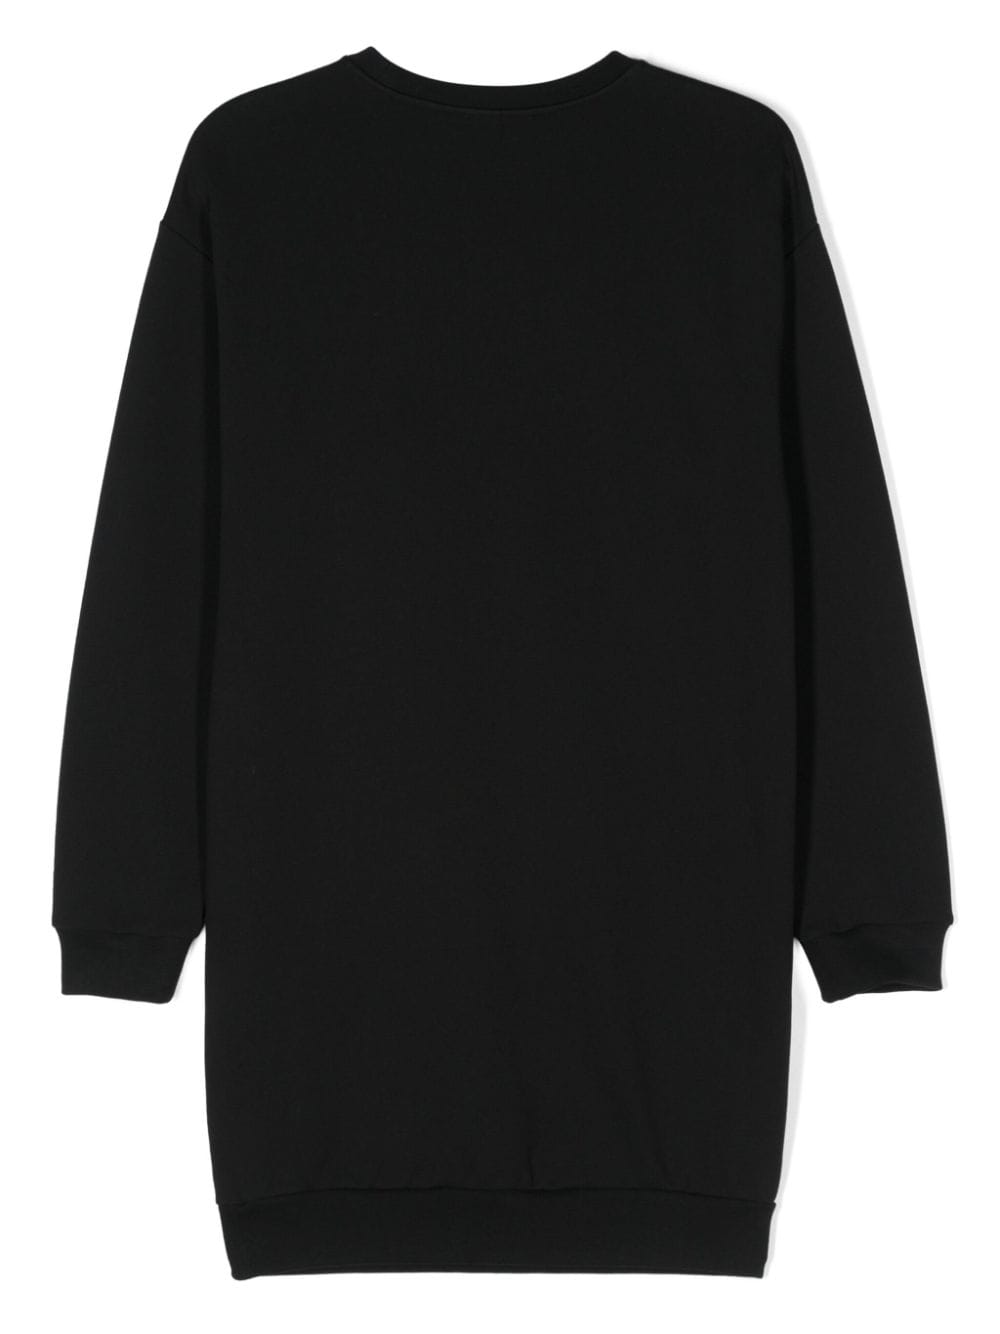 Black cotton dress for girls